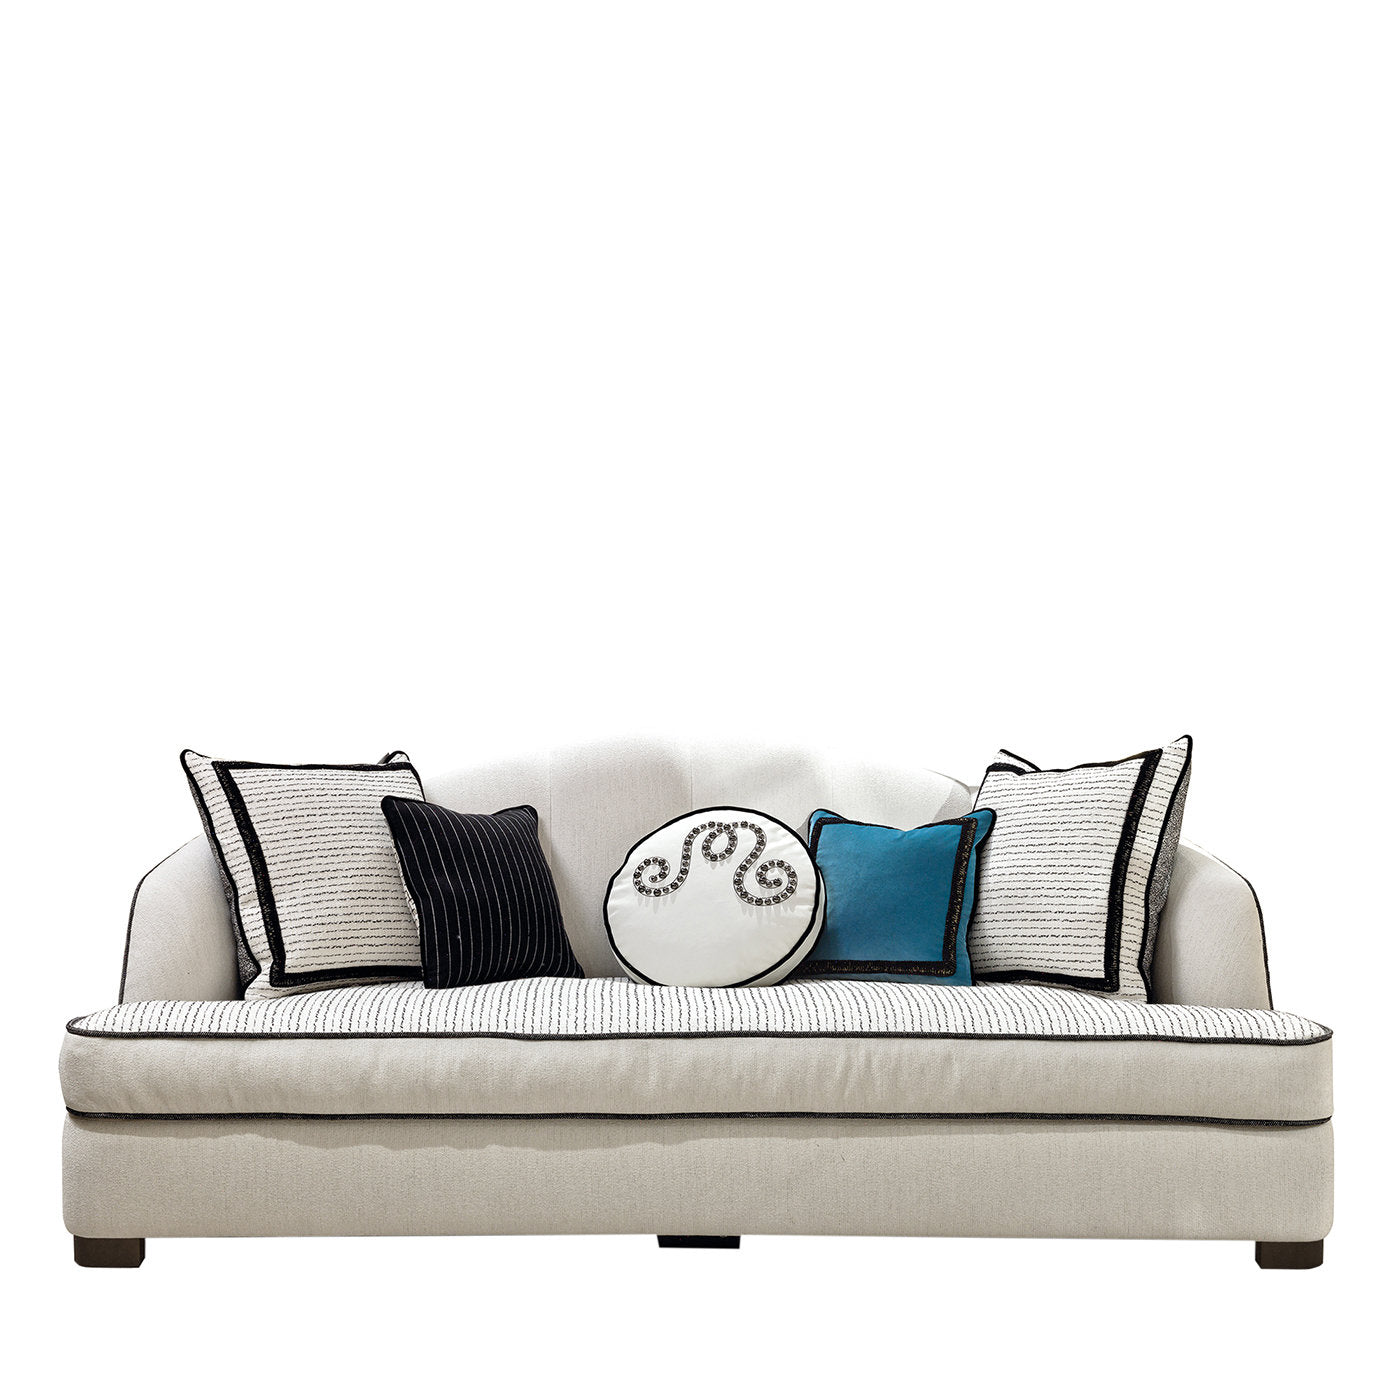 Luxury Grace Beige 3-Seater Sofa - Main view